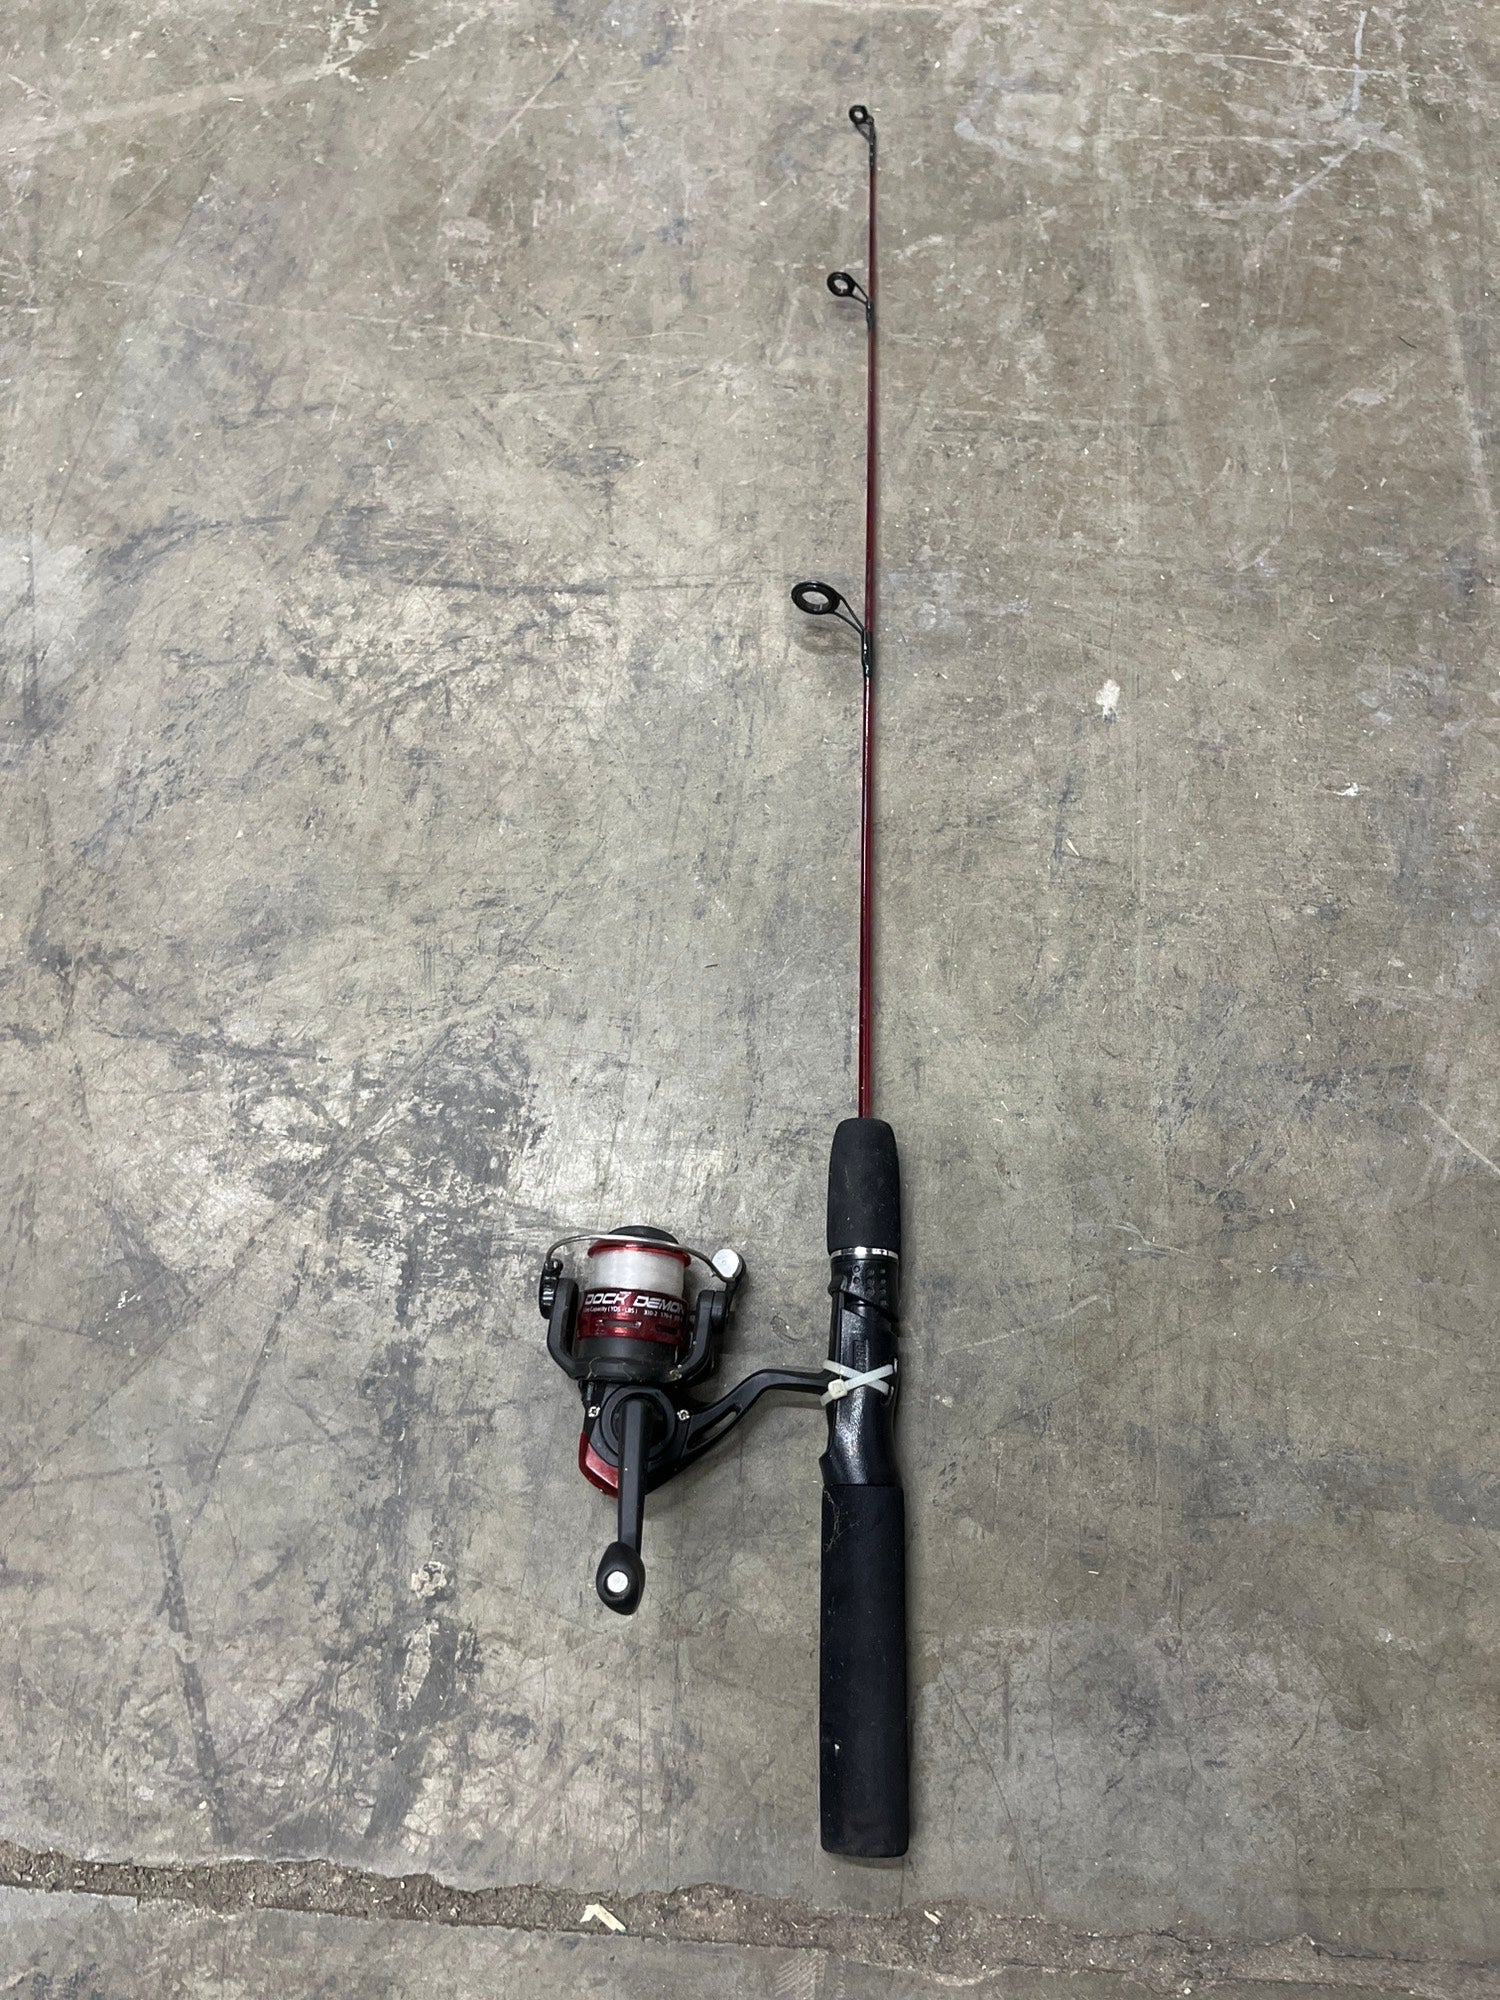 Zebco Dock Demon Spincast Reel and Fishing Rod Combo